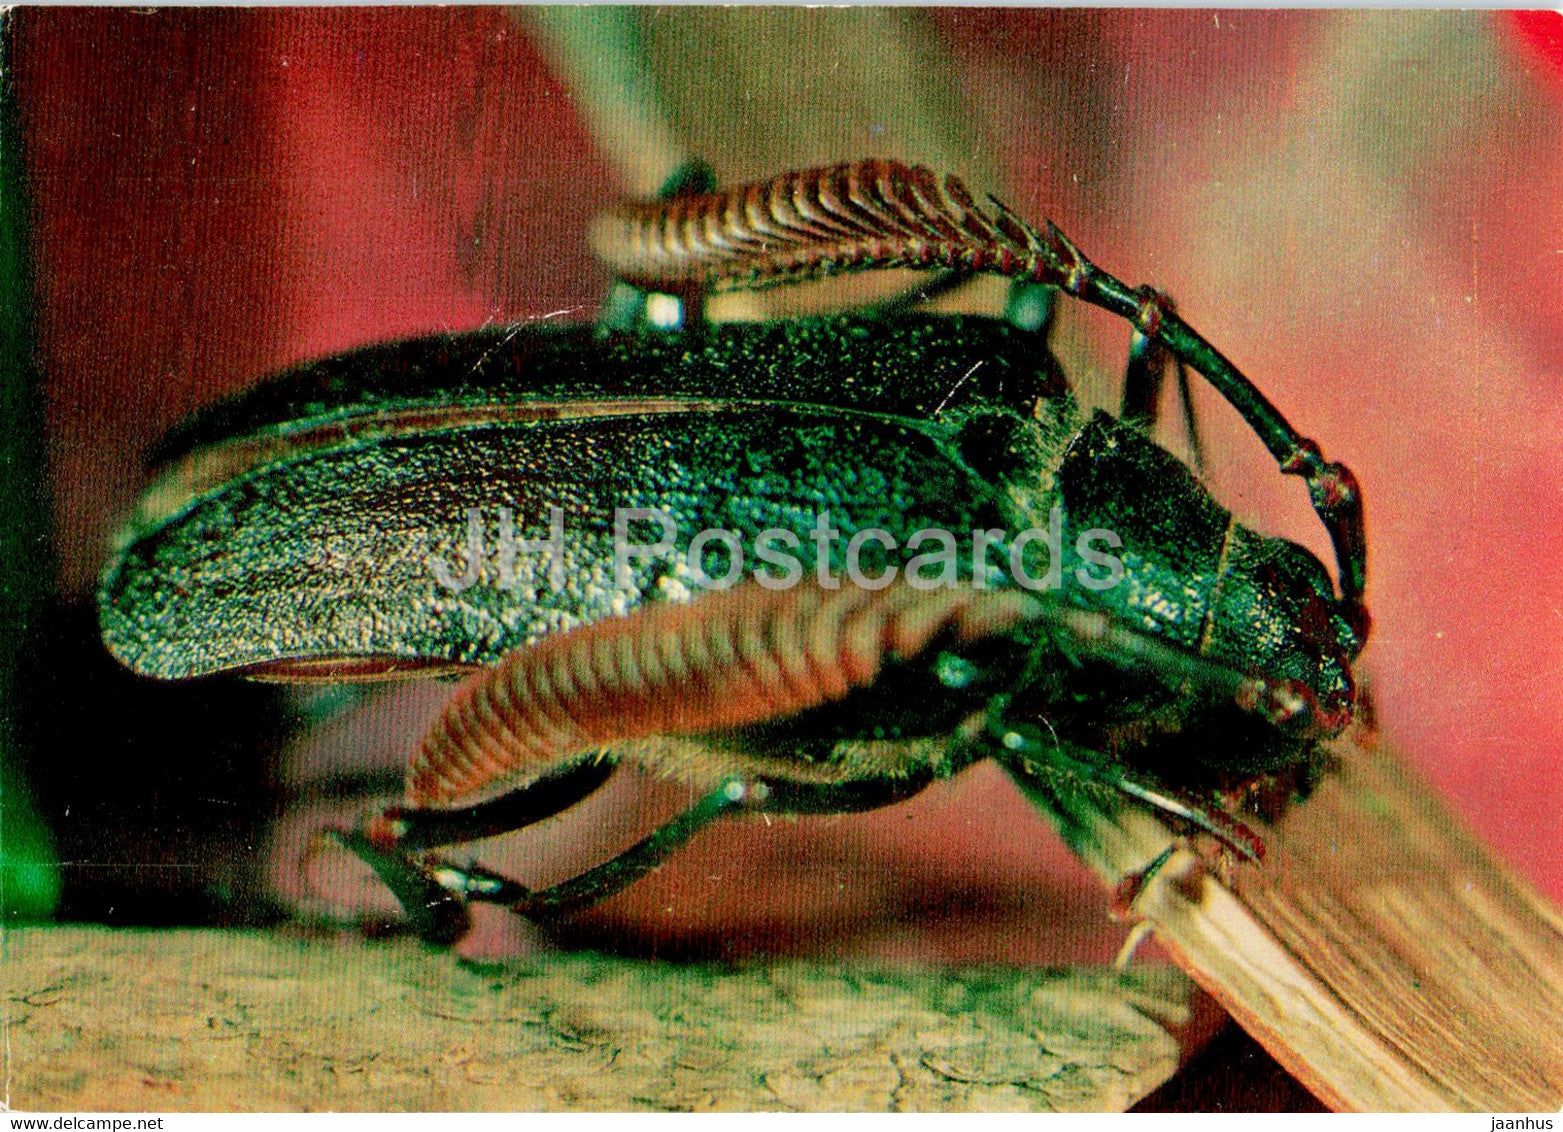 Prionus bienerti - insects - 1977 - Russia USSR - unused - JH Postcards